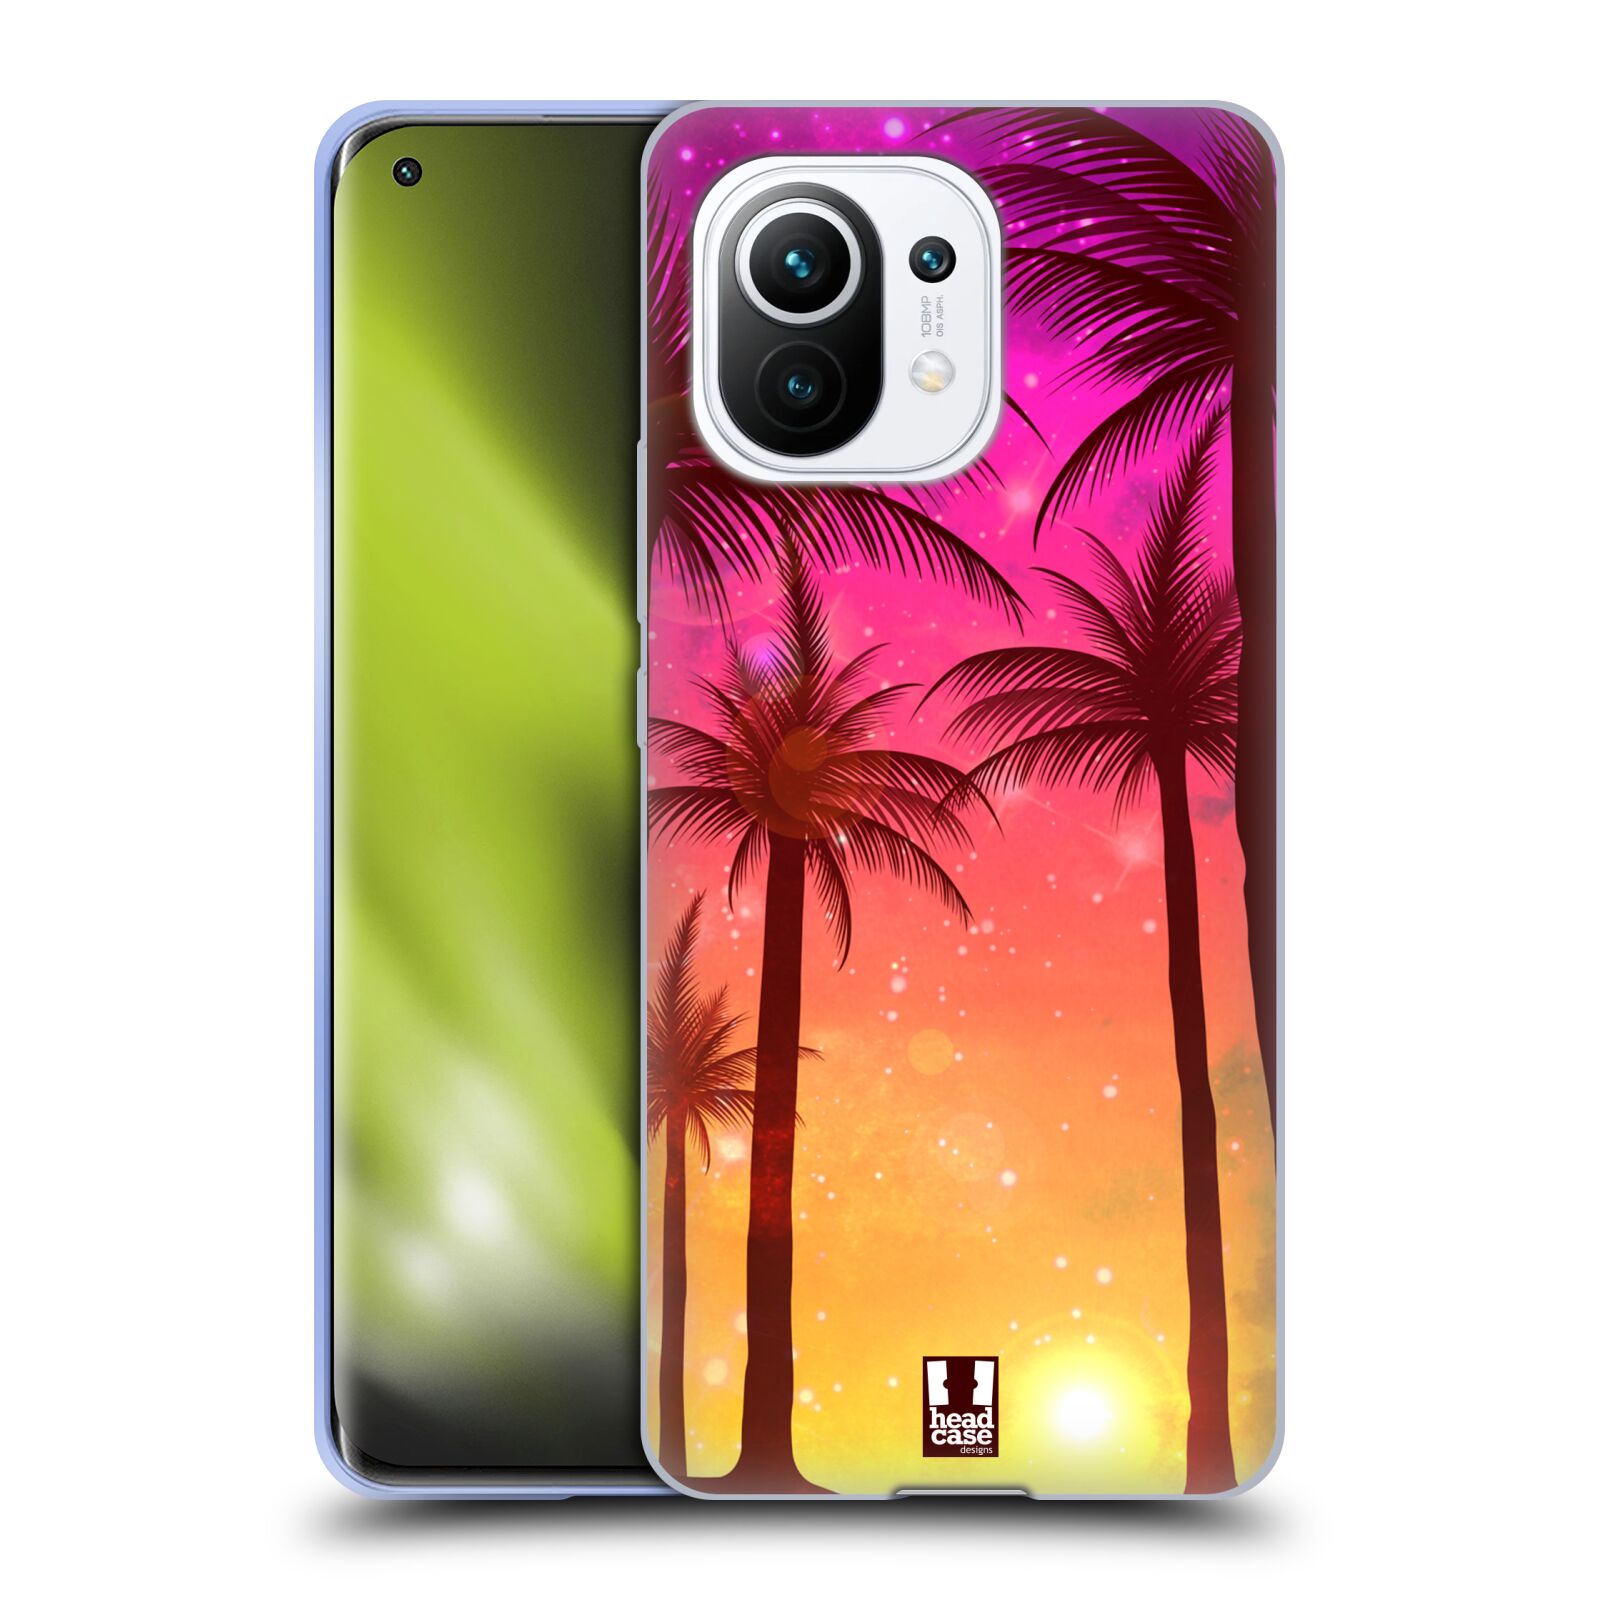 Plastový obal HEAD CASE na mobil Xiaomi Mi 11 vzor Kreslený motiv silueta moře a palmy RŮŽOVÁ